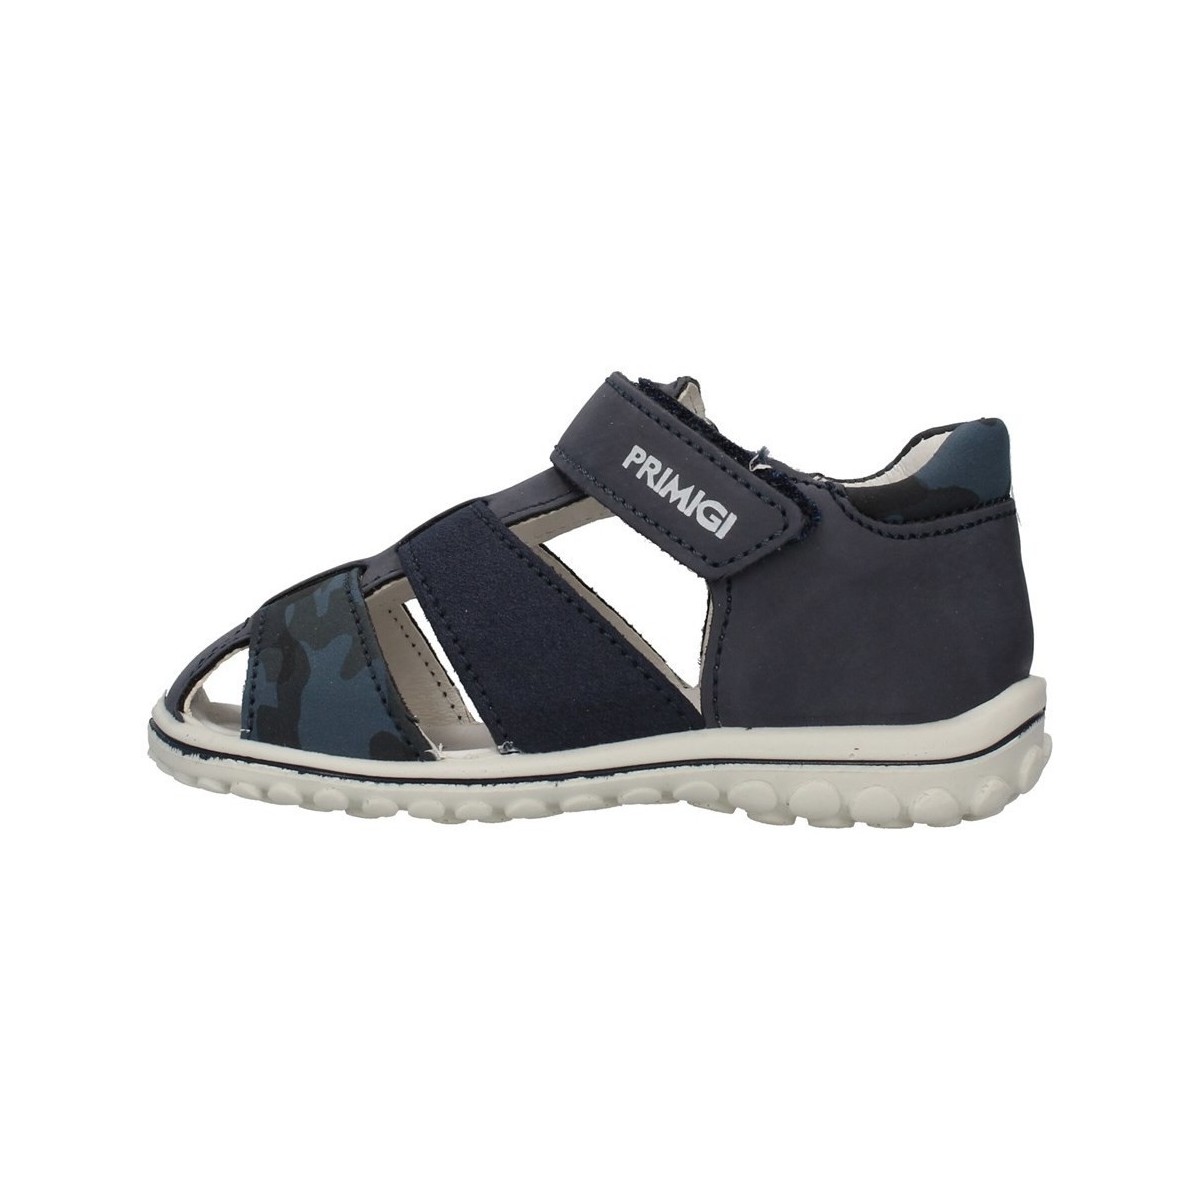 Schuhe Mädchen Sandalen / Sandaletten Primigi 1862500 Blau